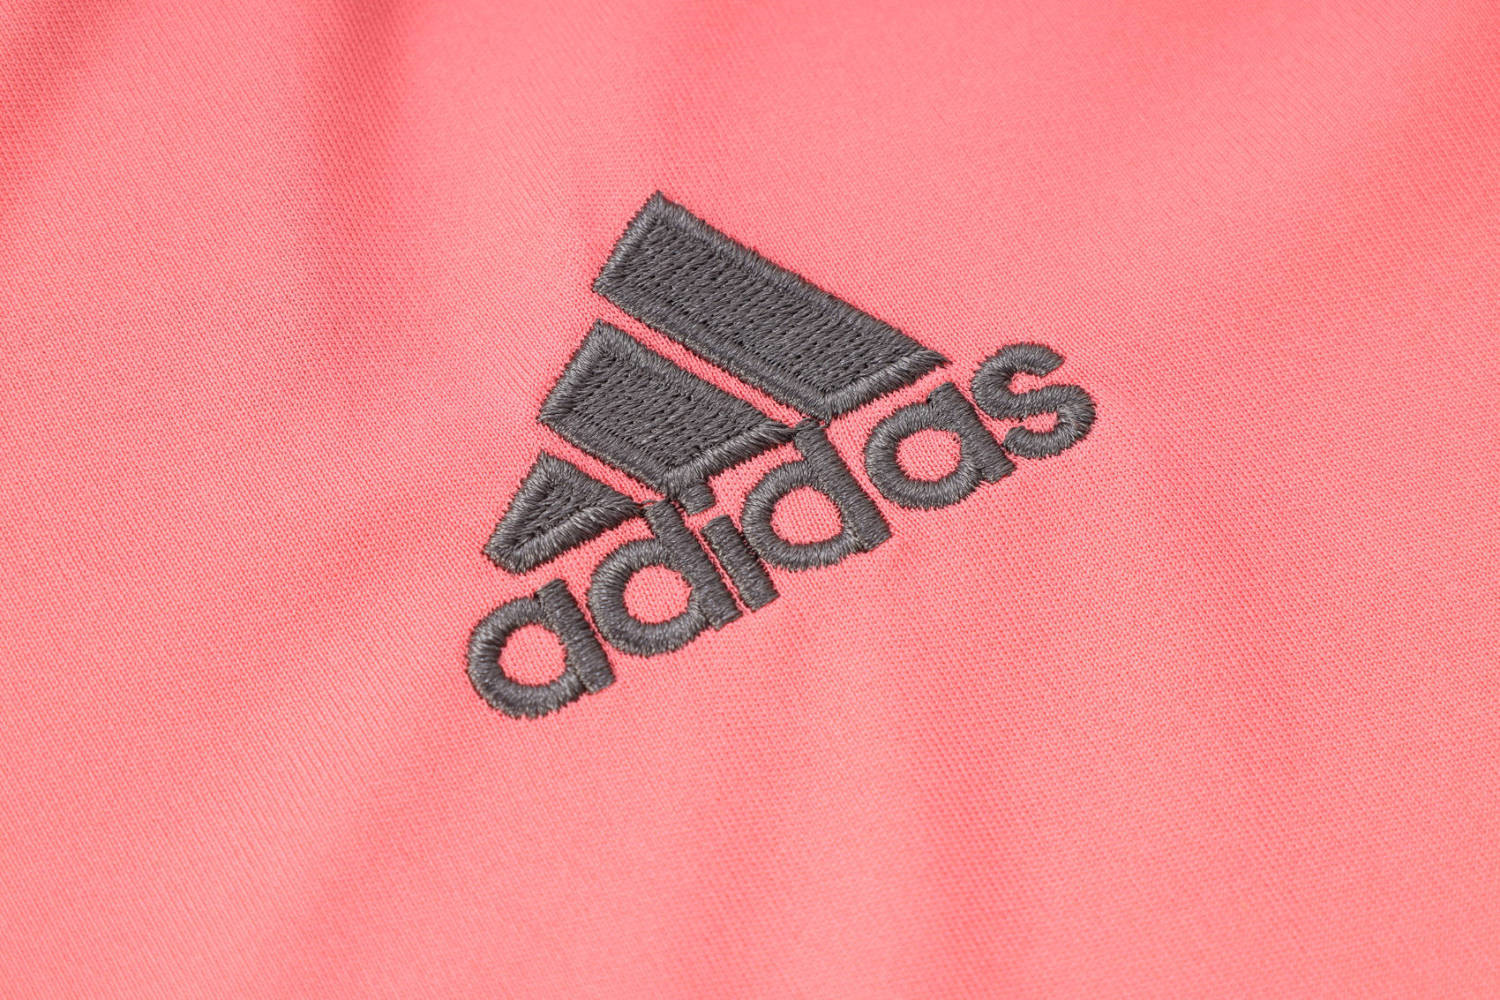 International Soccer Polo Jersey Replica Pink 2022/23 Men's